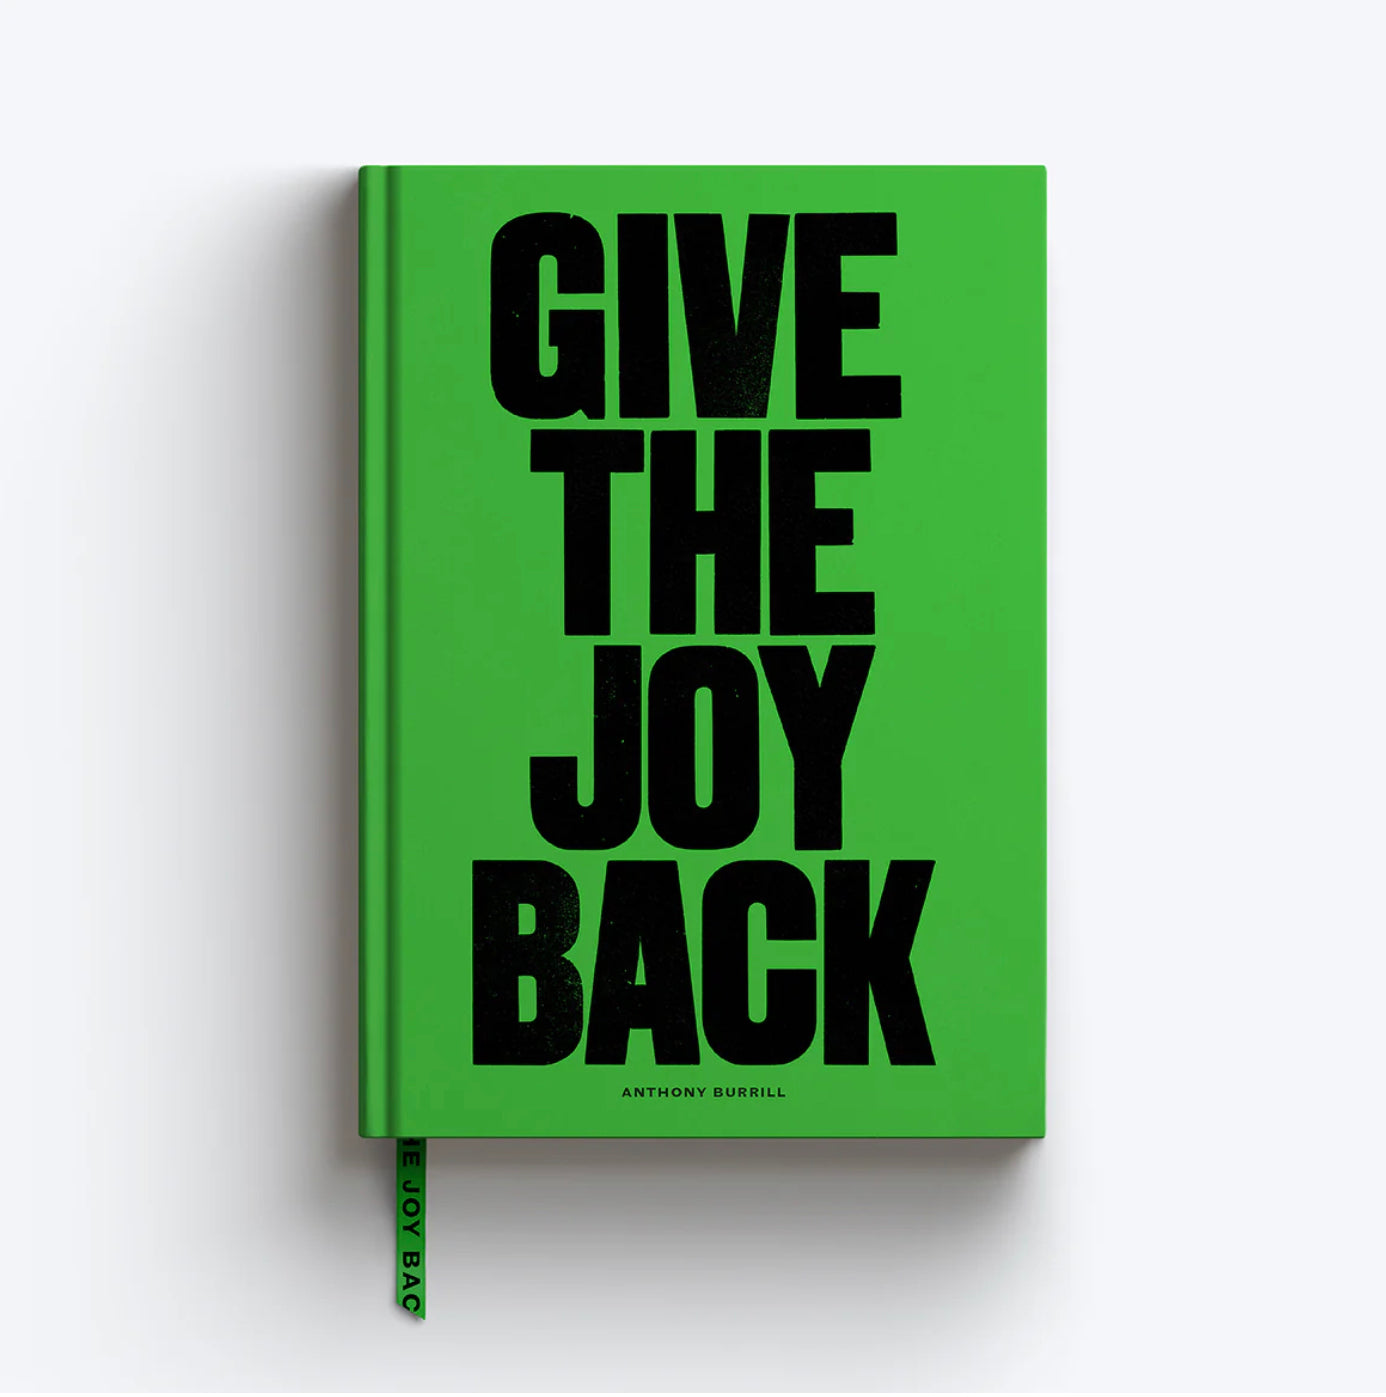 Give the joy back Anthony Burrill notebook